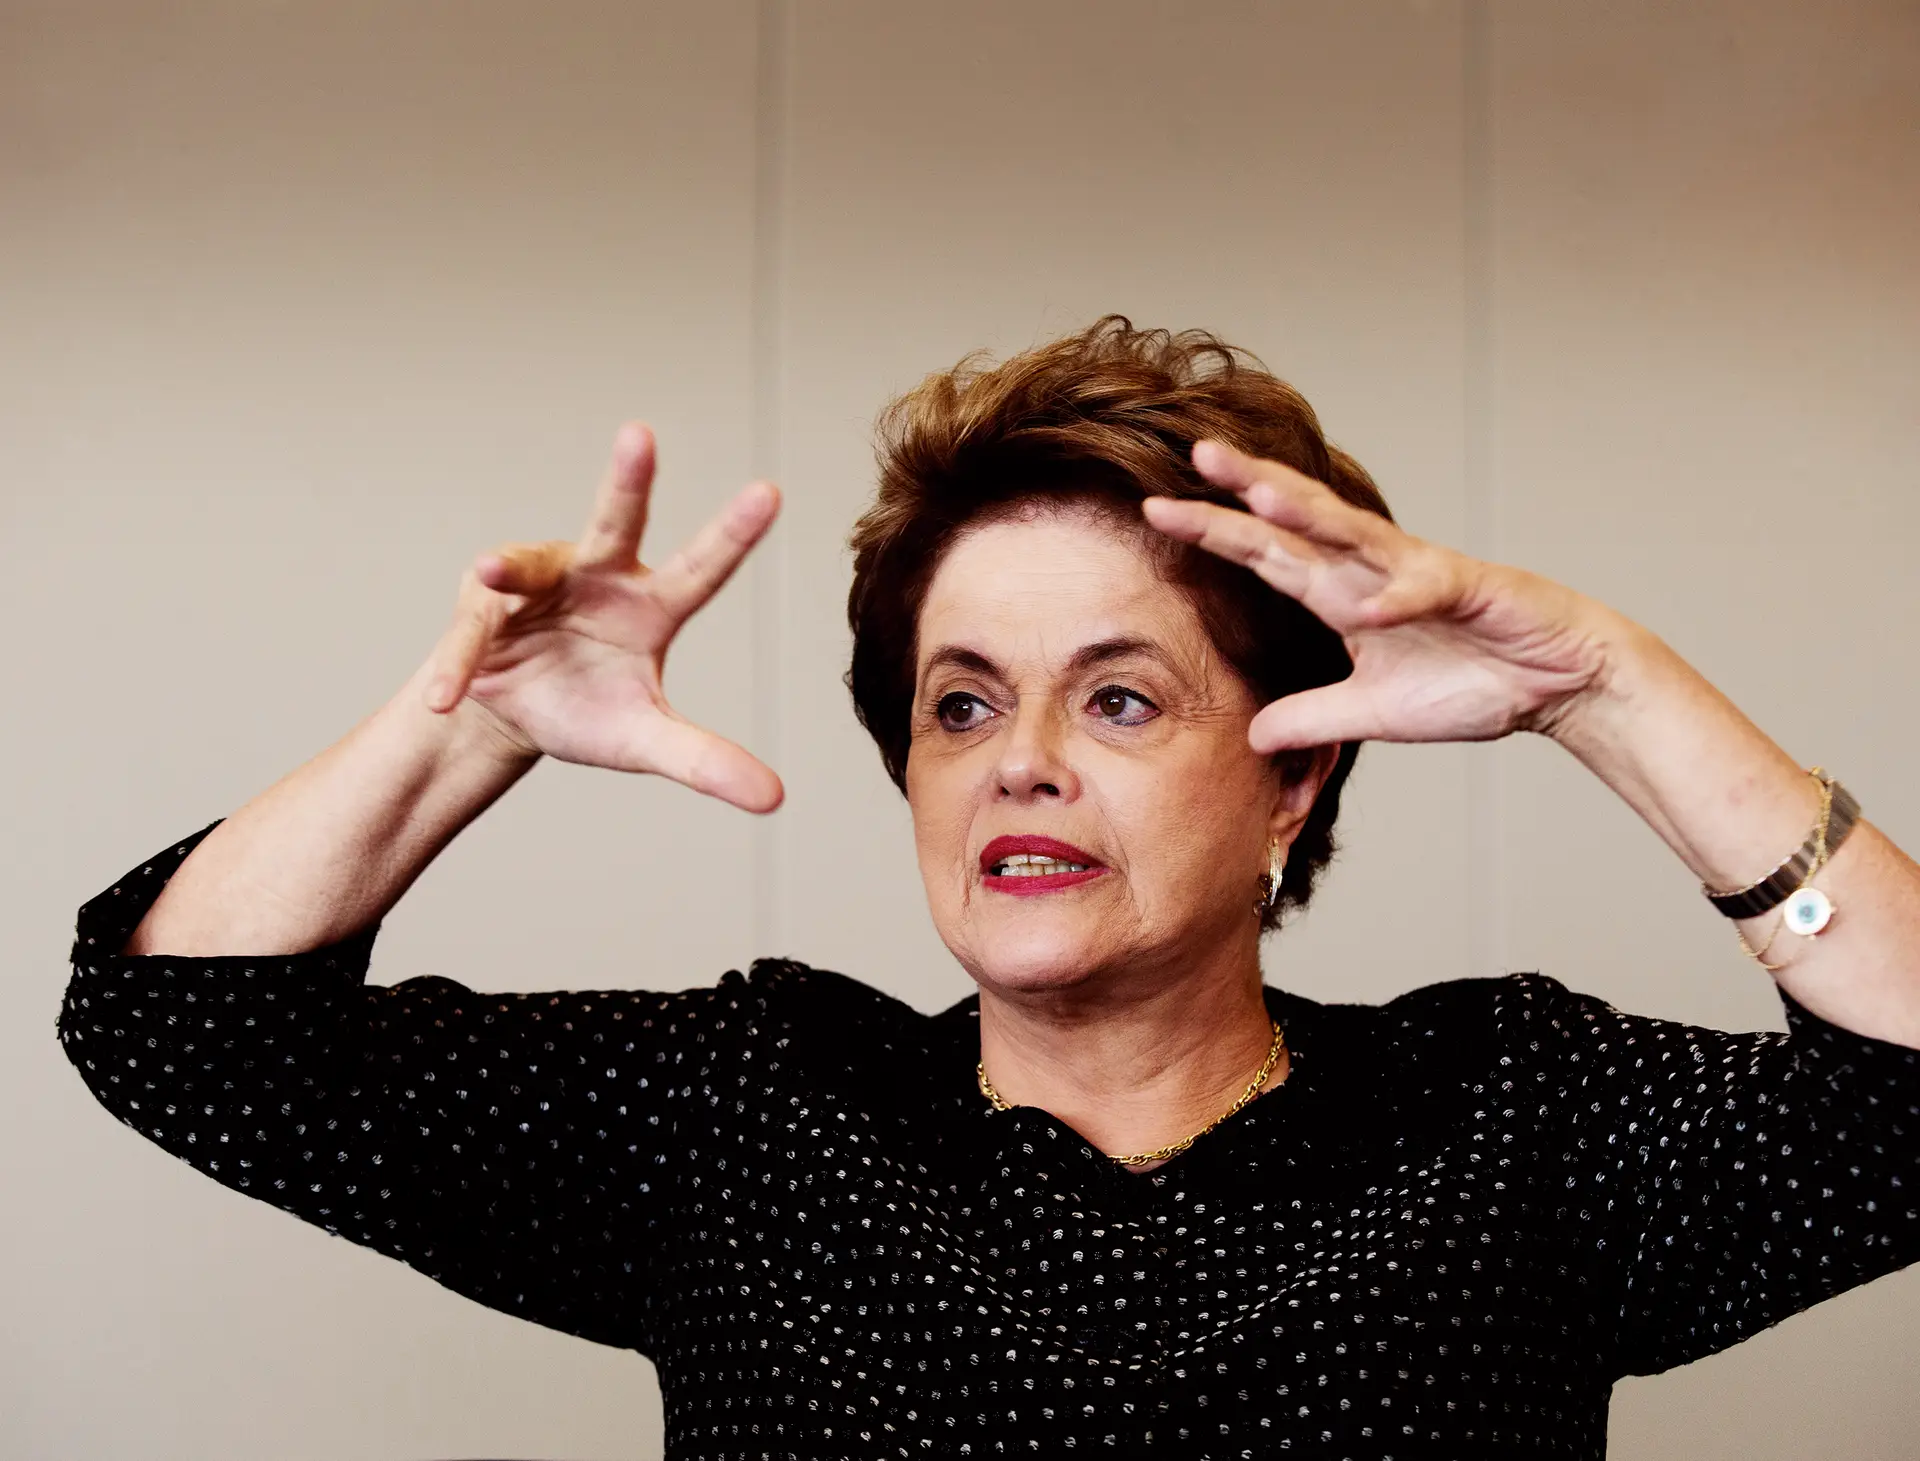 Dilma Rousseff eleita nova presidente do banco do grupo de economias emergentes BRICS